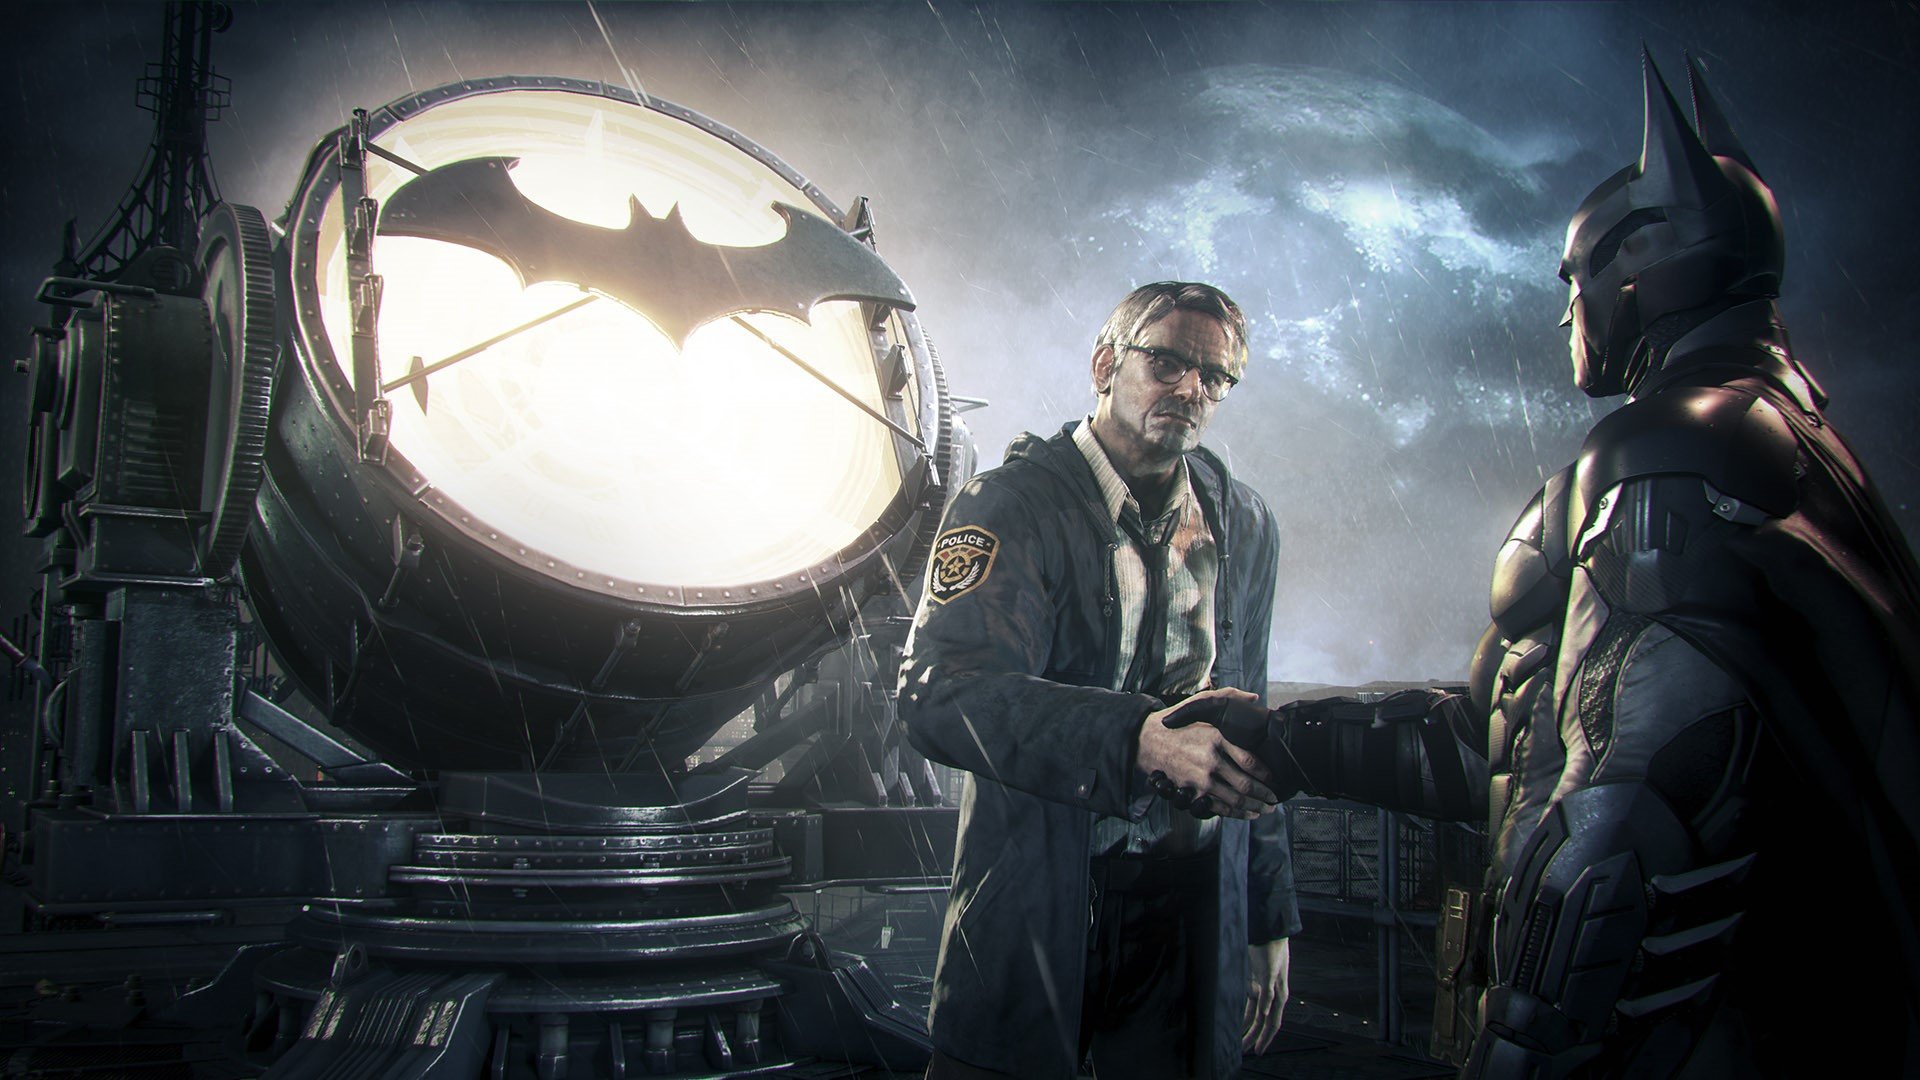 Free-to-play brawler Batman: Arkham Origins launching for mobile devices -  Polygon